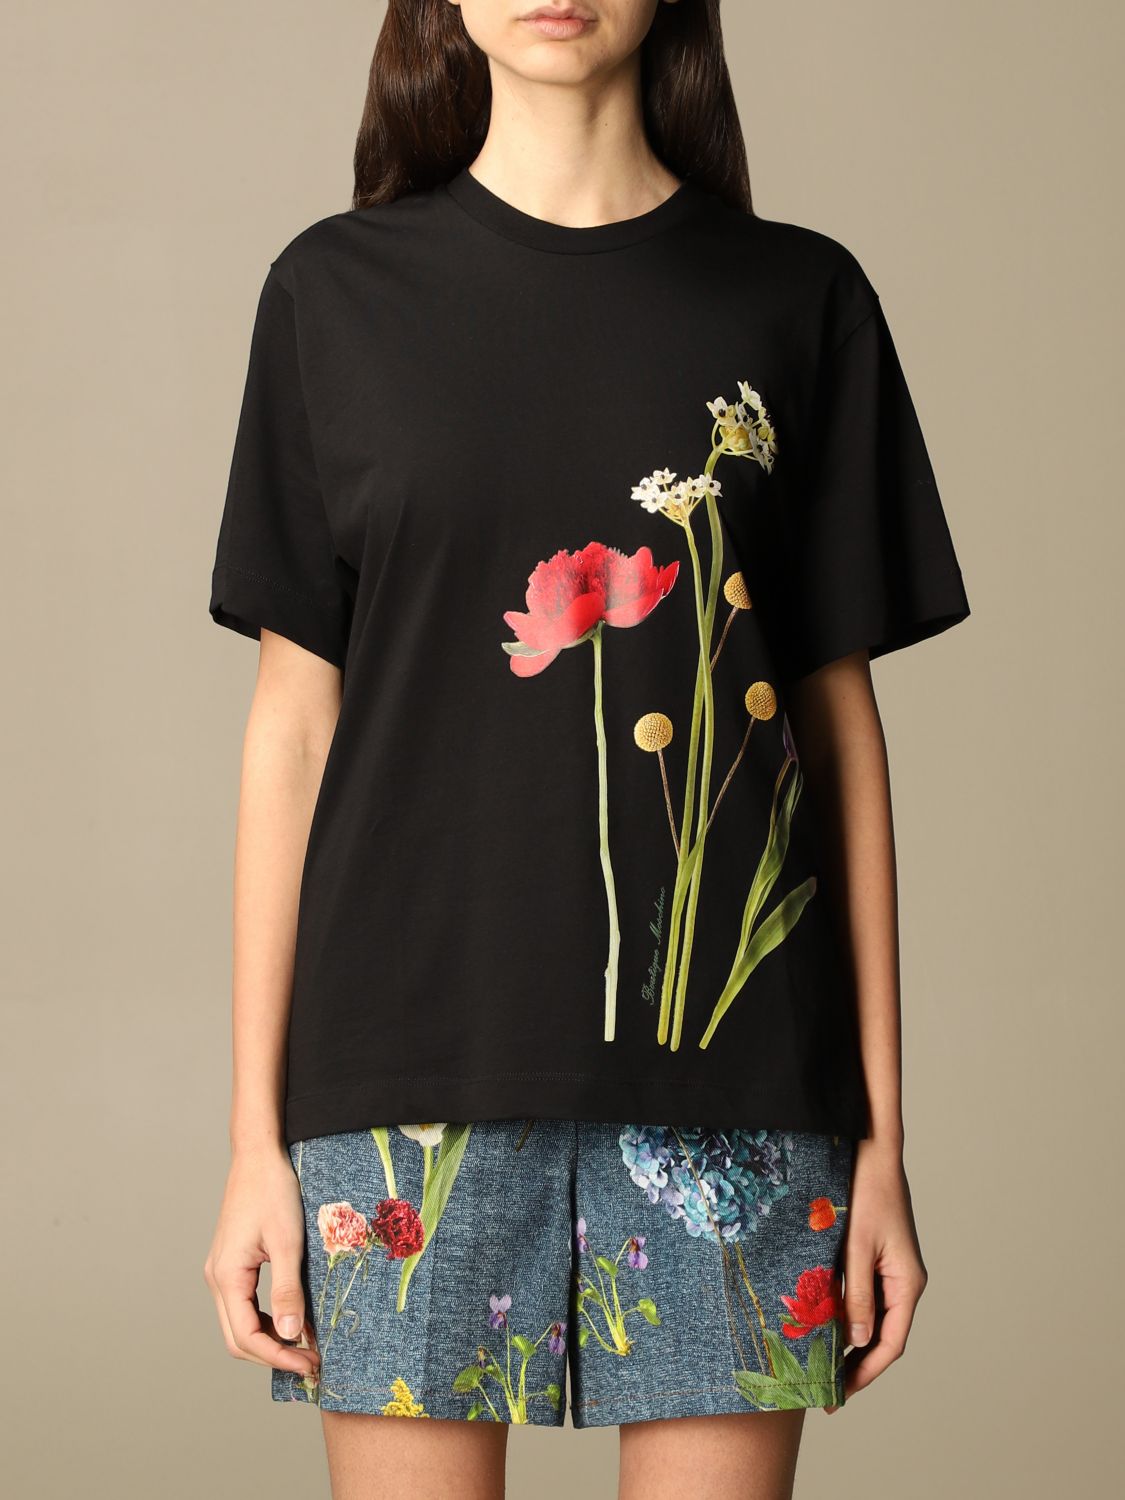 moschino floral shirt